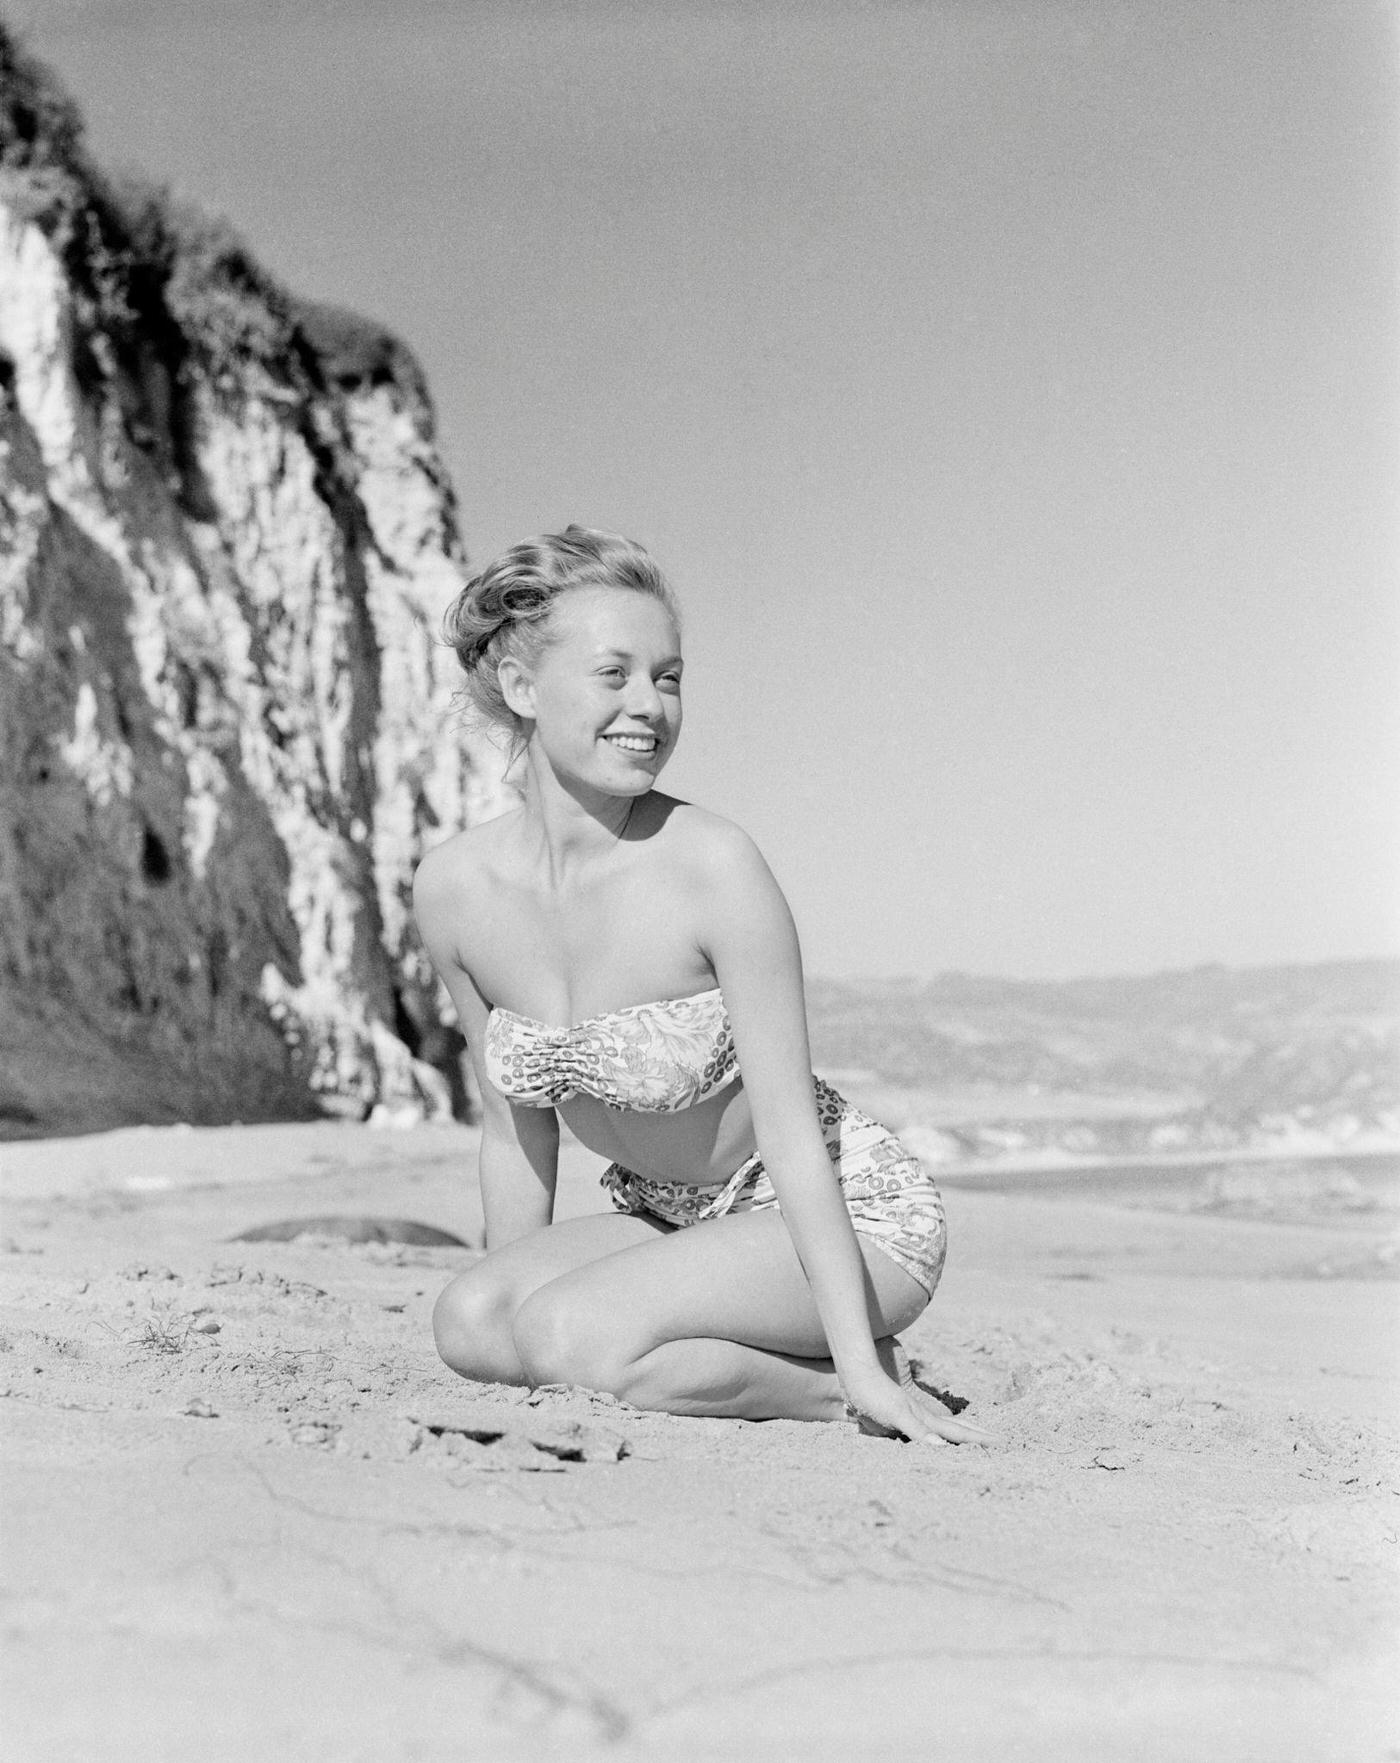 Model Fran Cooper wearing a patterned bikini on the beach, 1948.